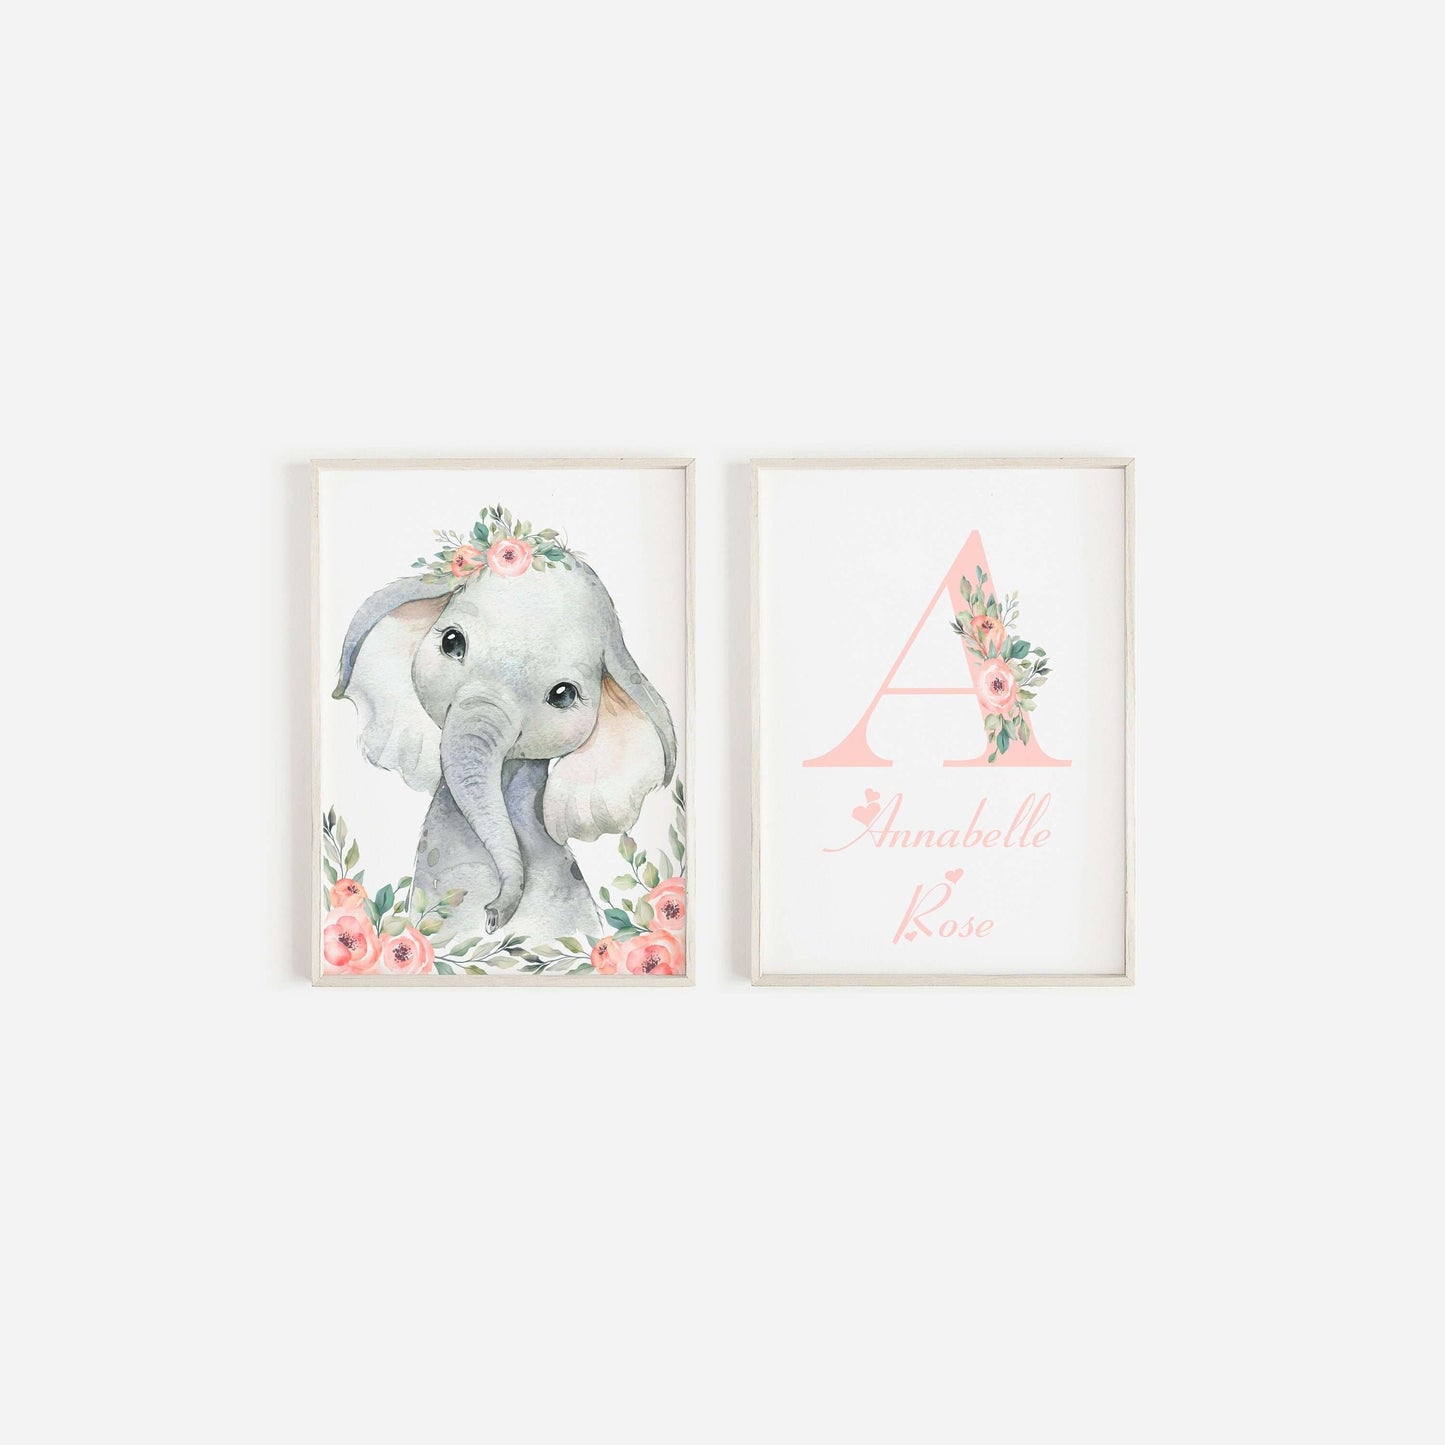 Girls Personalised Elephant Baby Set Of 2 A4 Prints, With Initial, Safari Animals, Flowers, Nursery Gift, Nursery Wall Art, Animal Prints